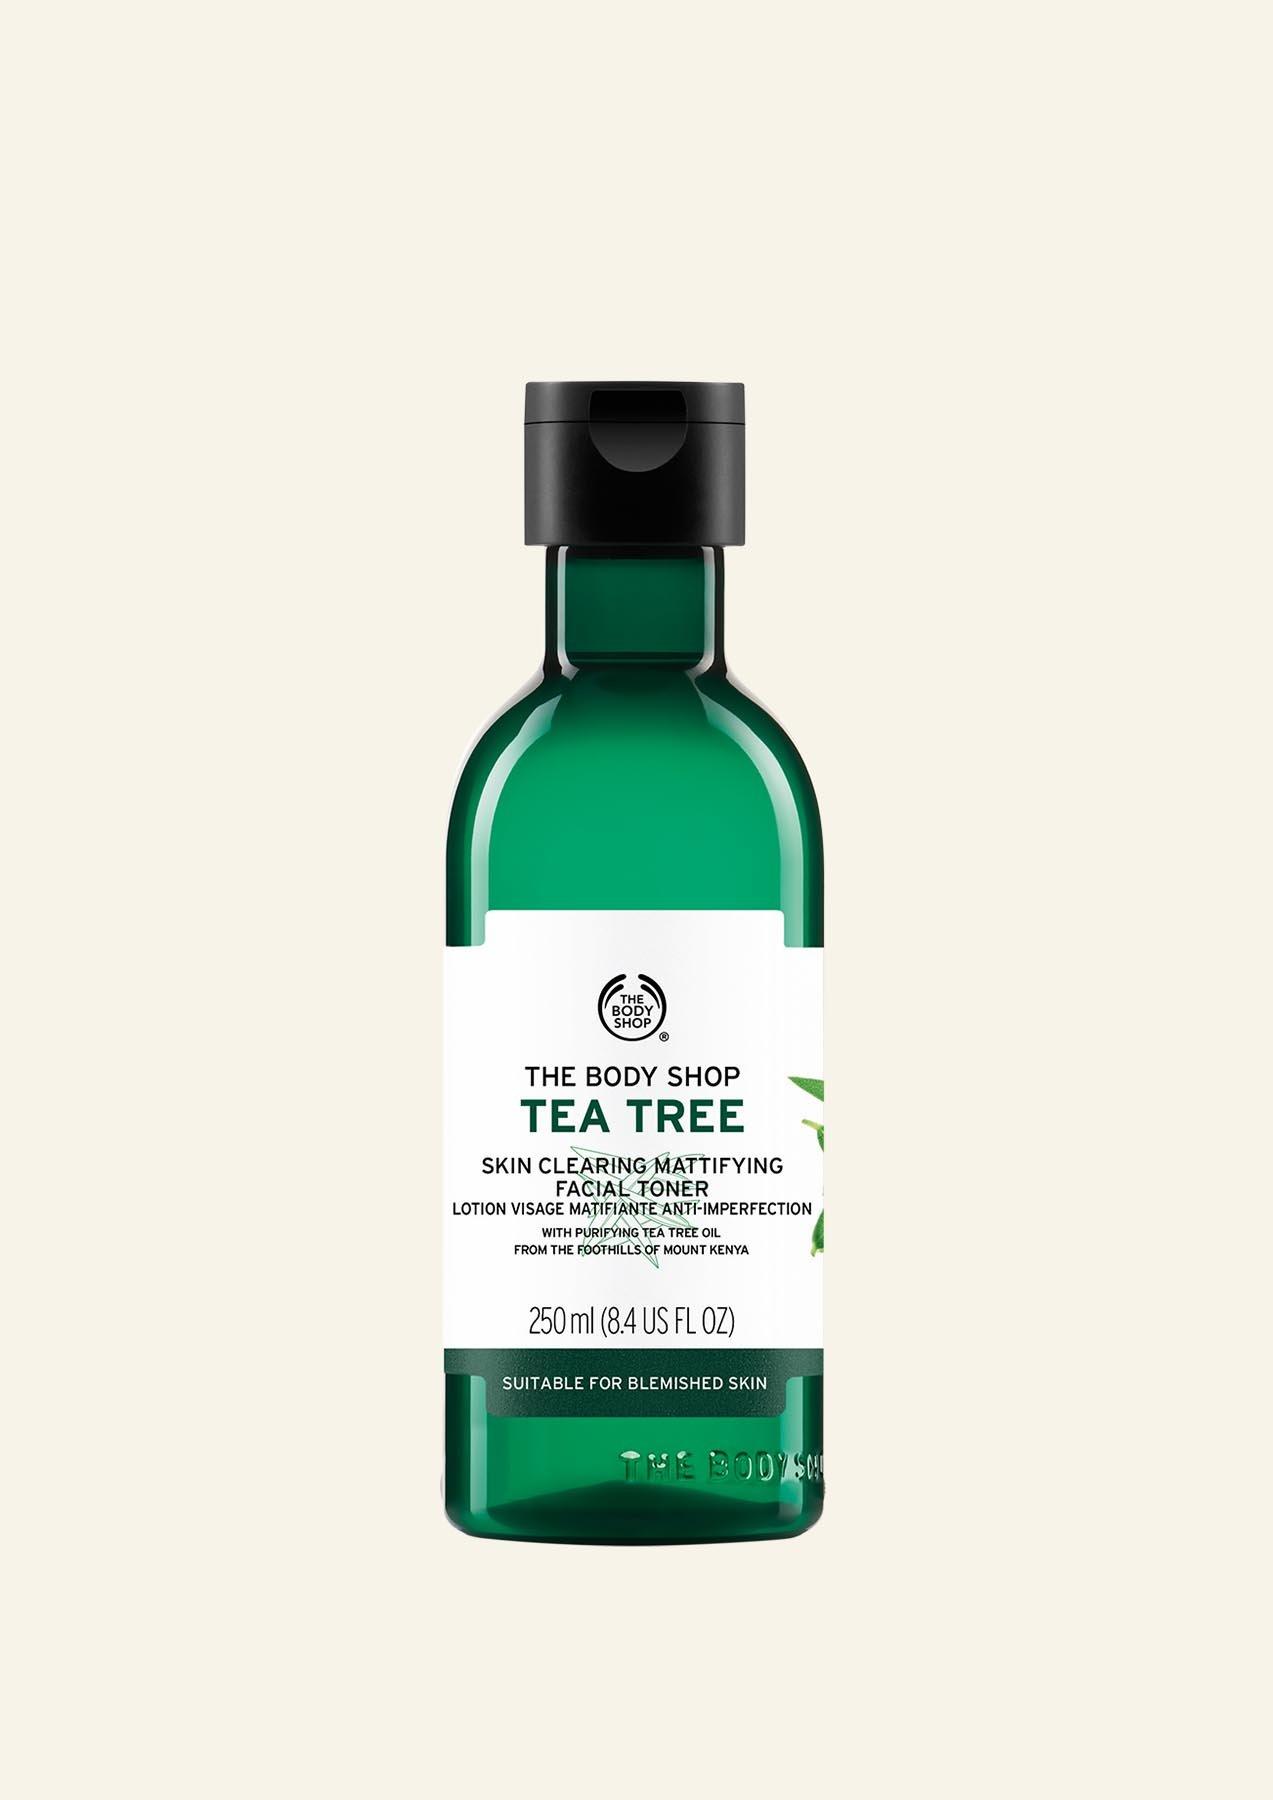 Tea Tree Skin Clearing Mattifying Toner 250ml